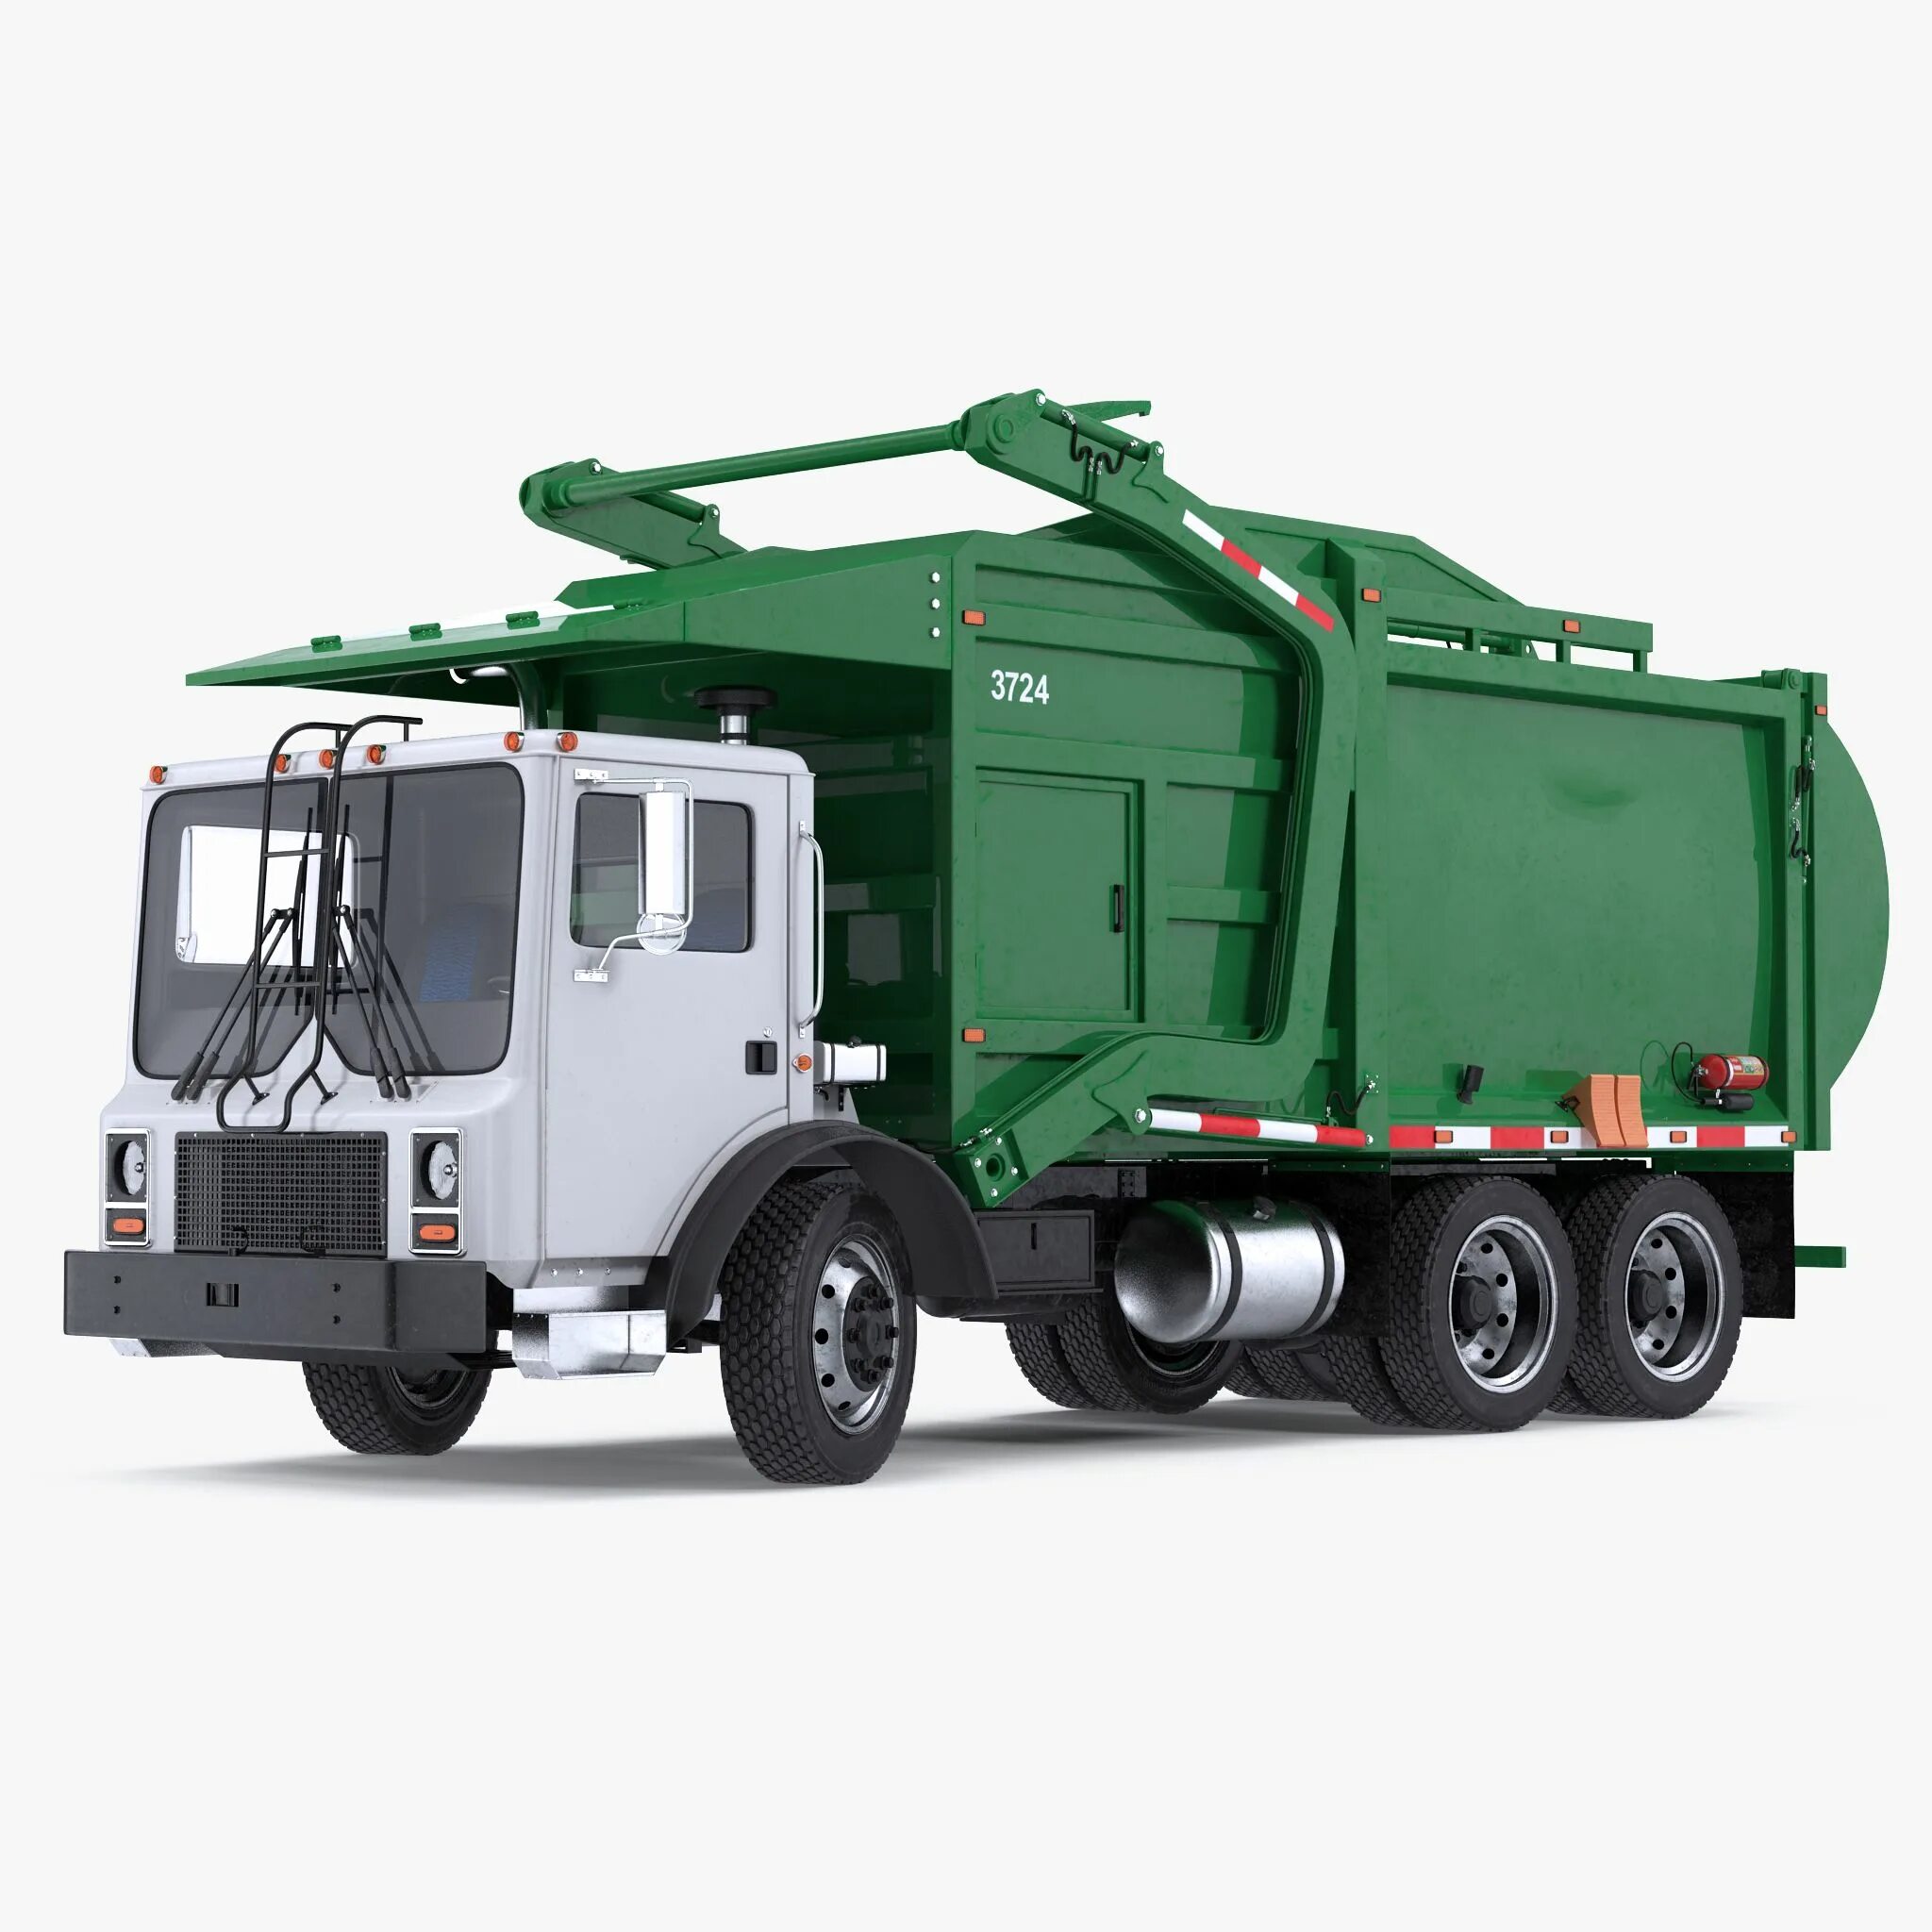 Garbage Truck мусоровоз. МВ-10 мусоровоз. Компактор для мусоровоза.